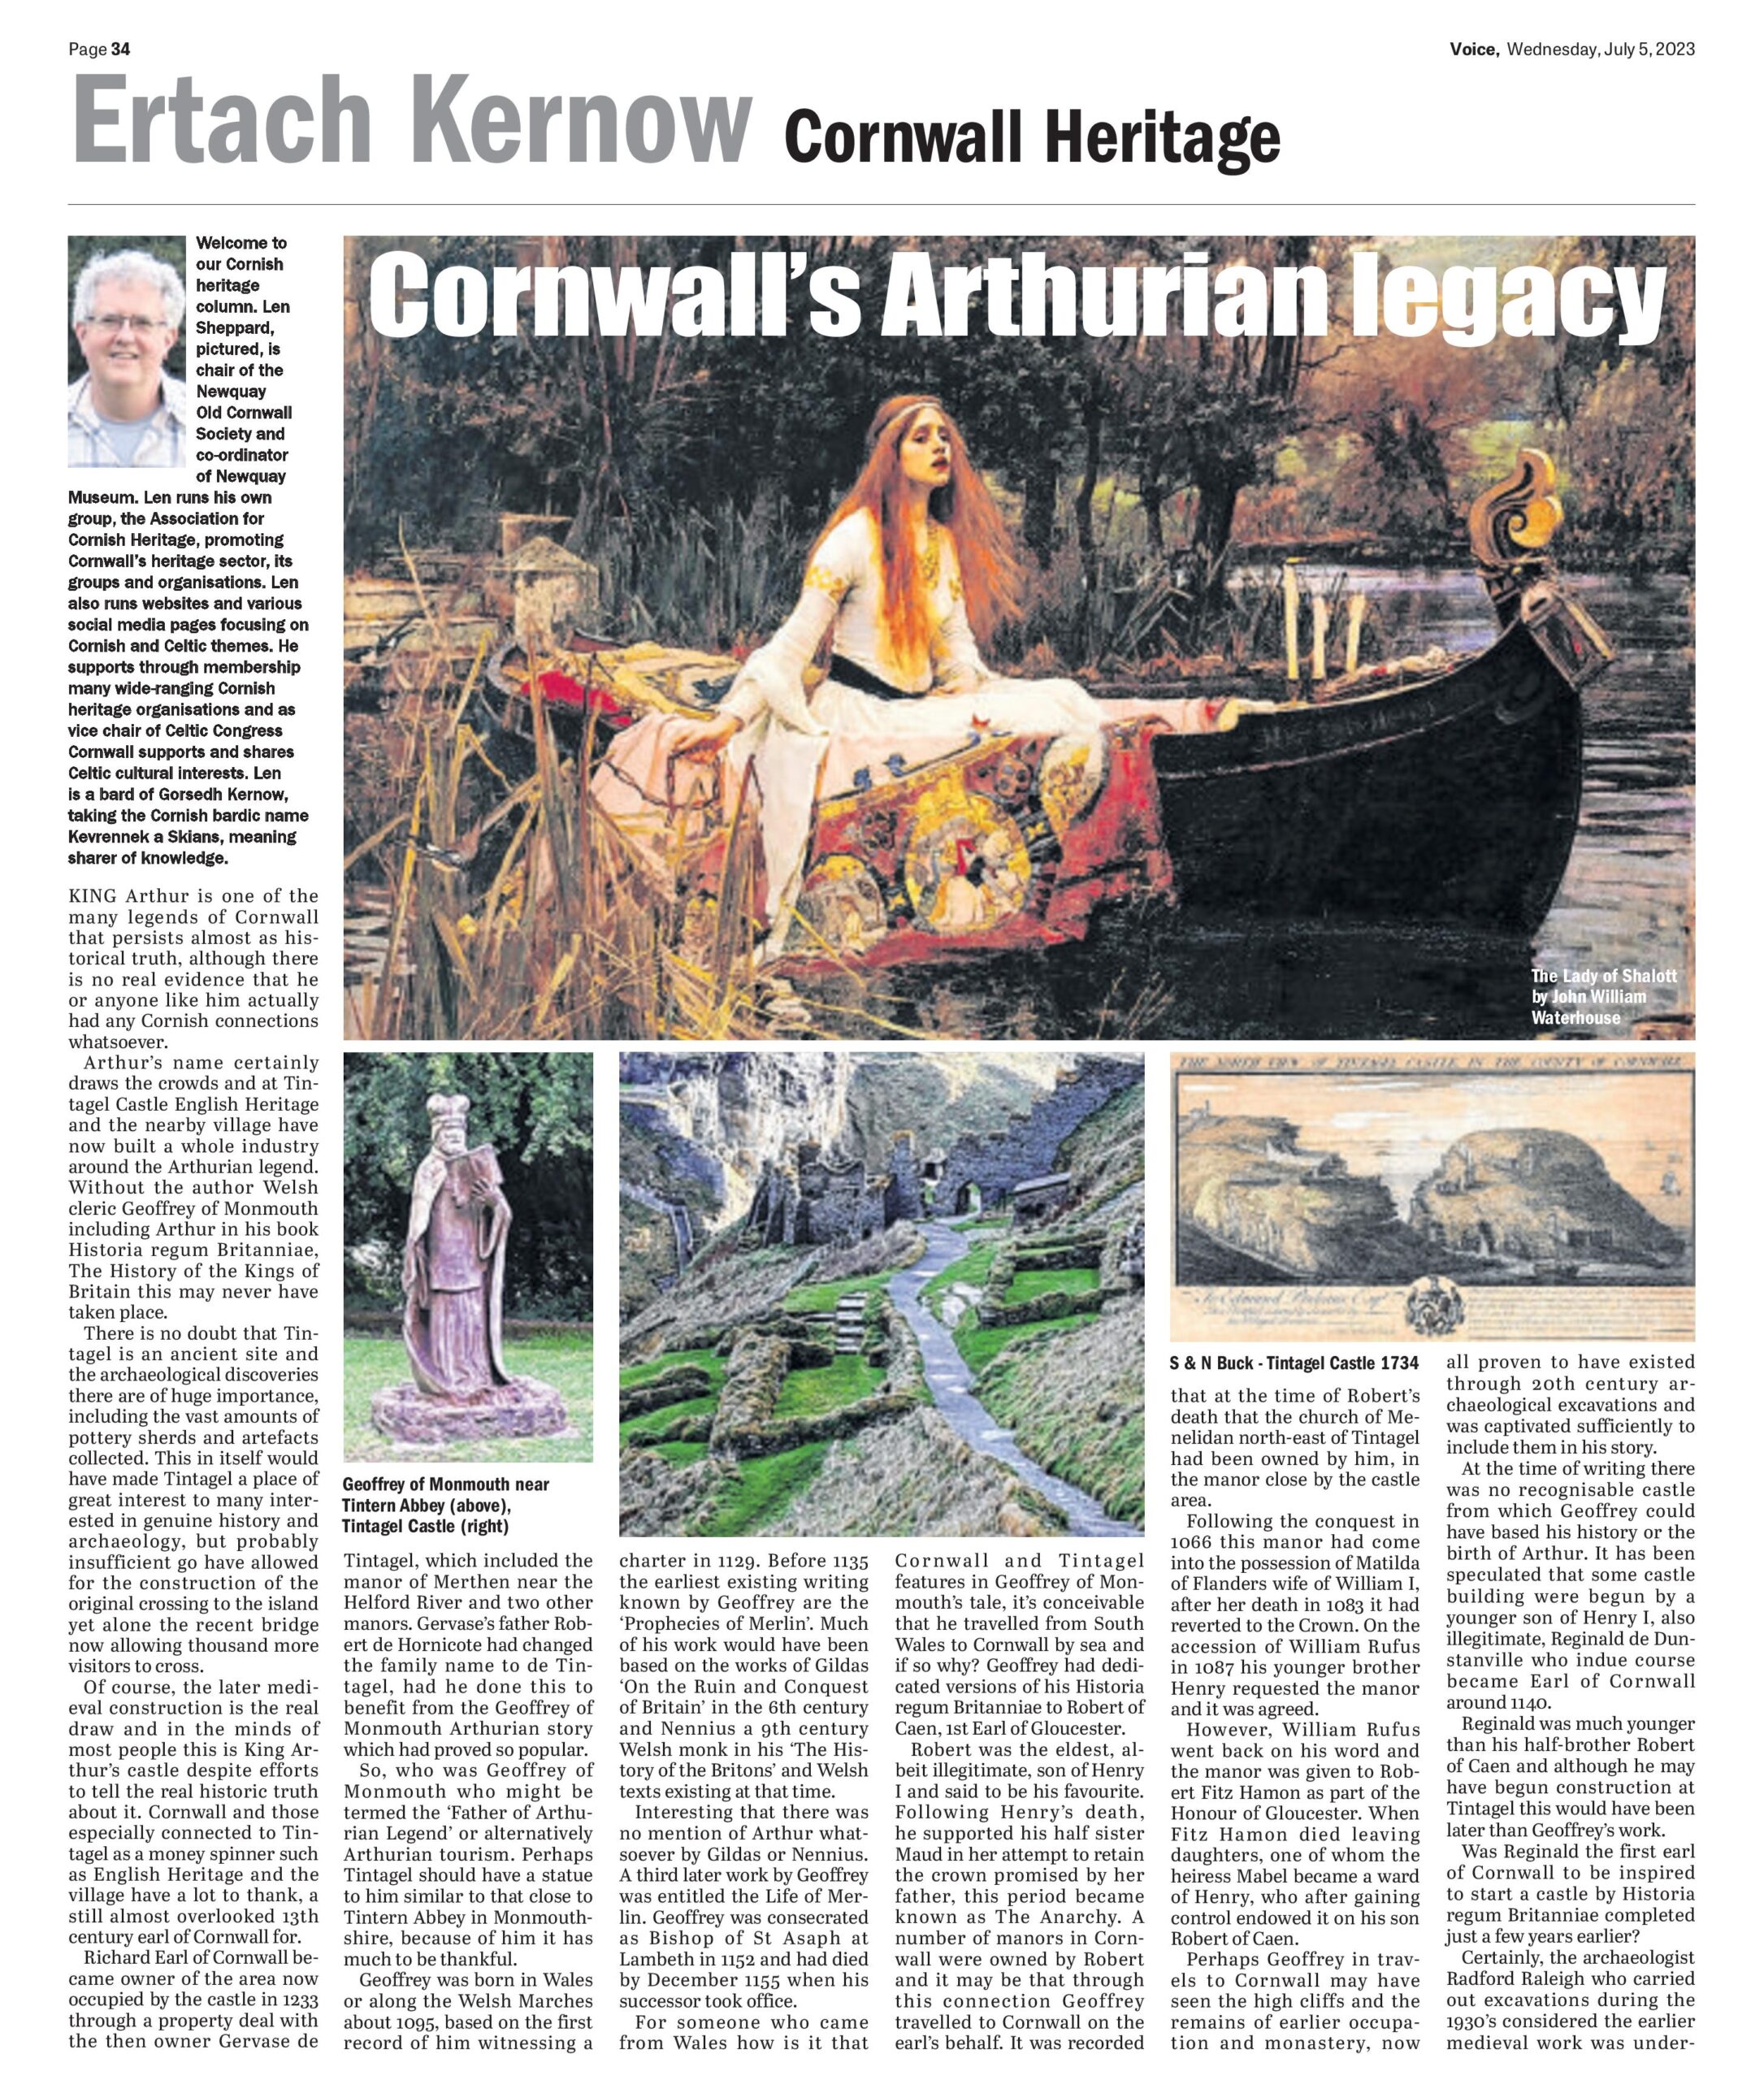 King Arthur, Cornwall's Arthurian legacy